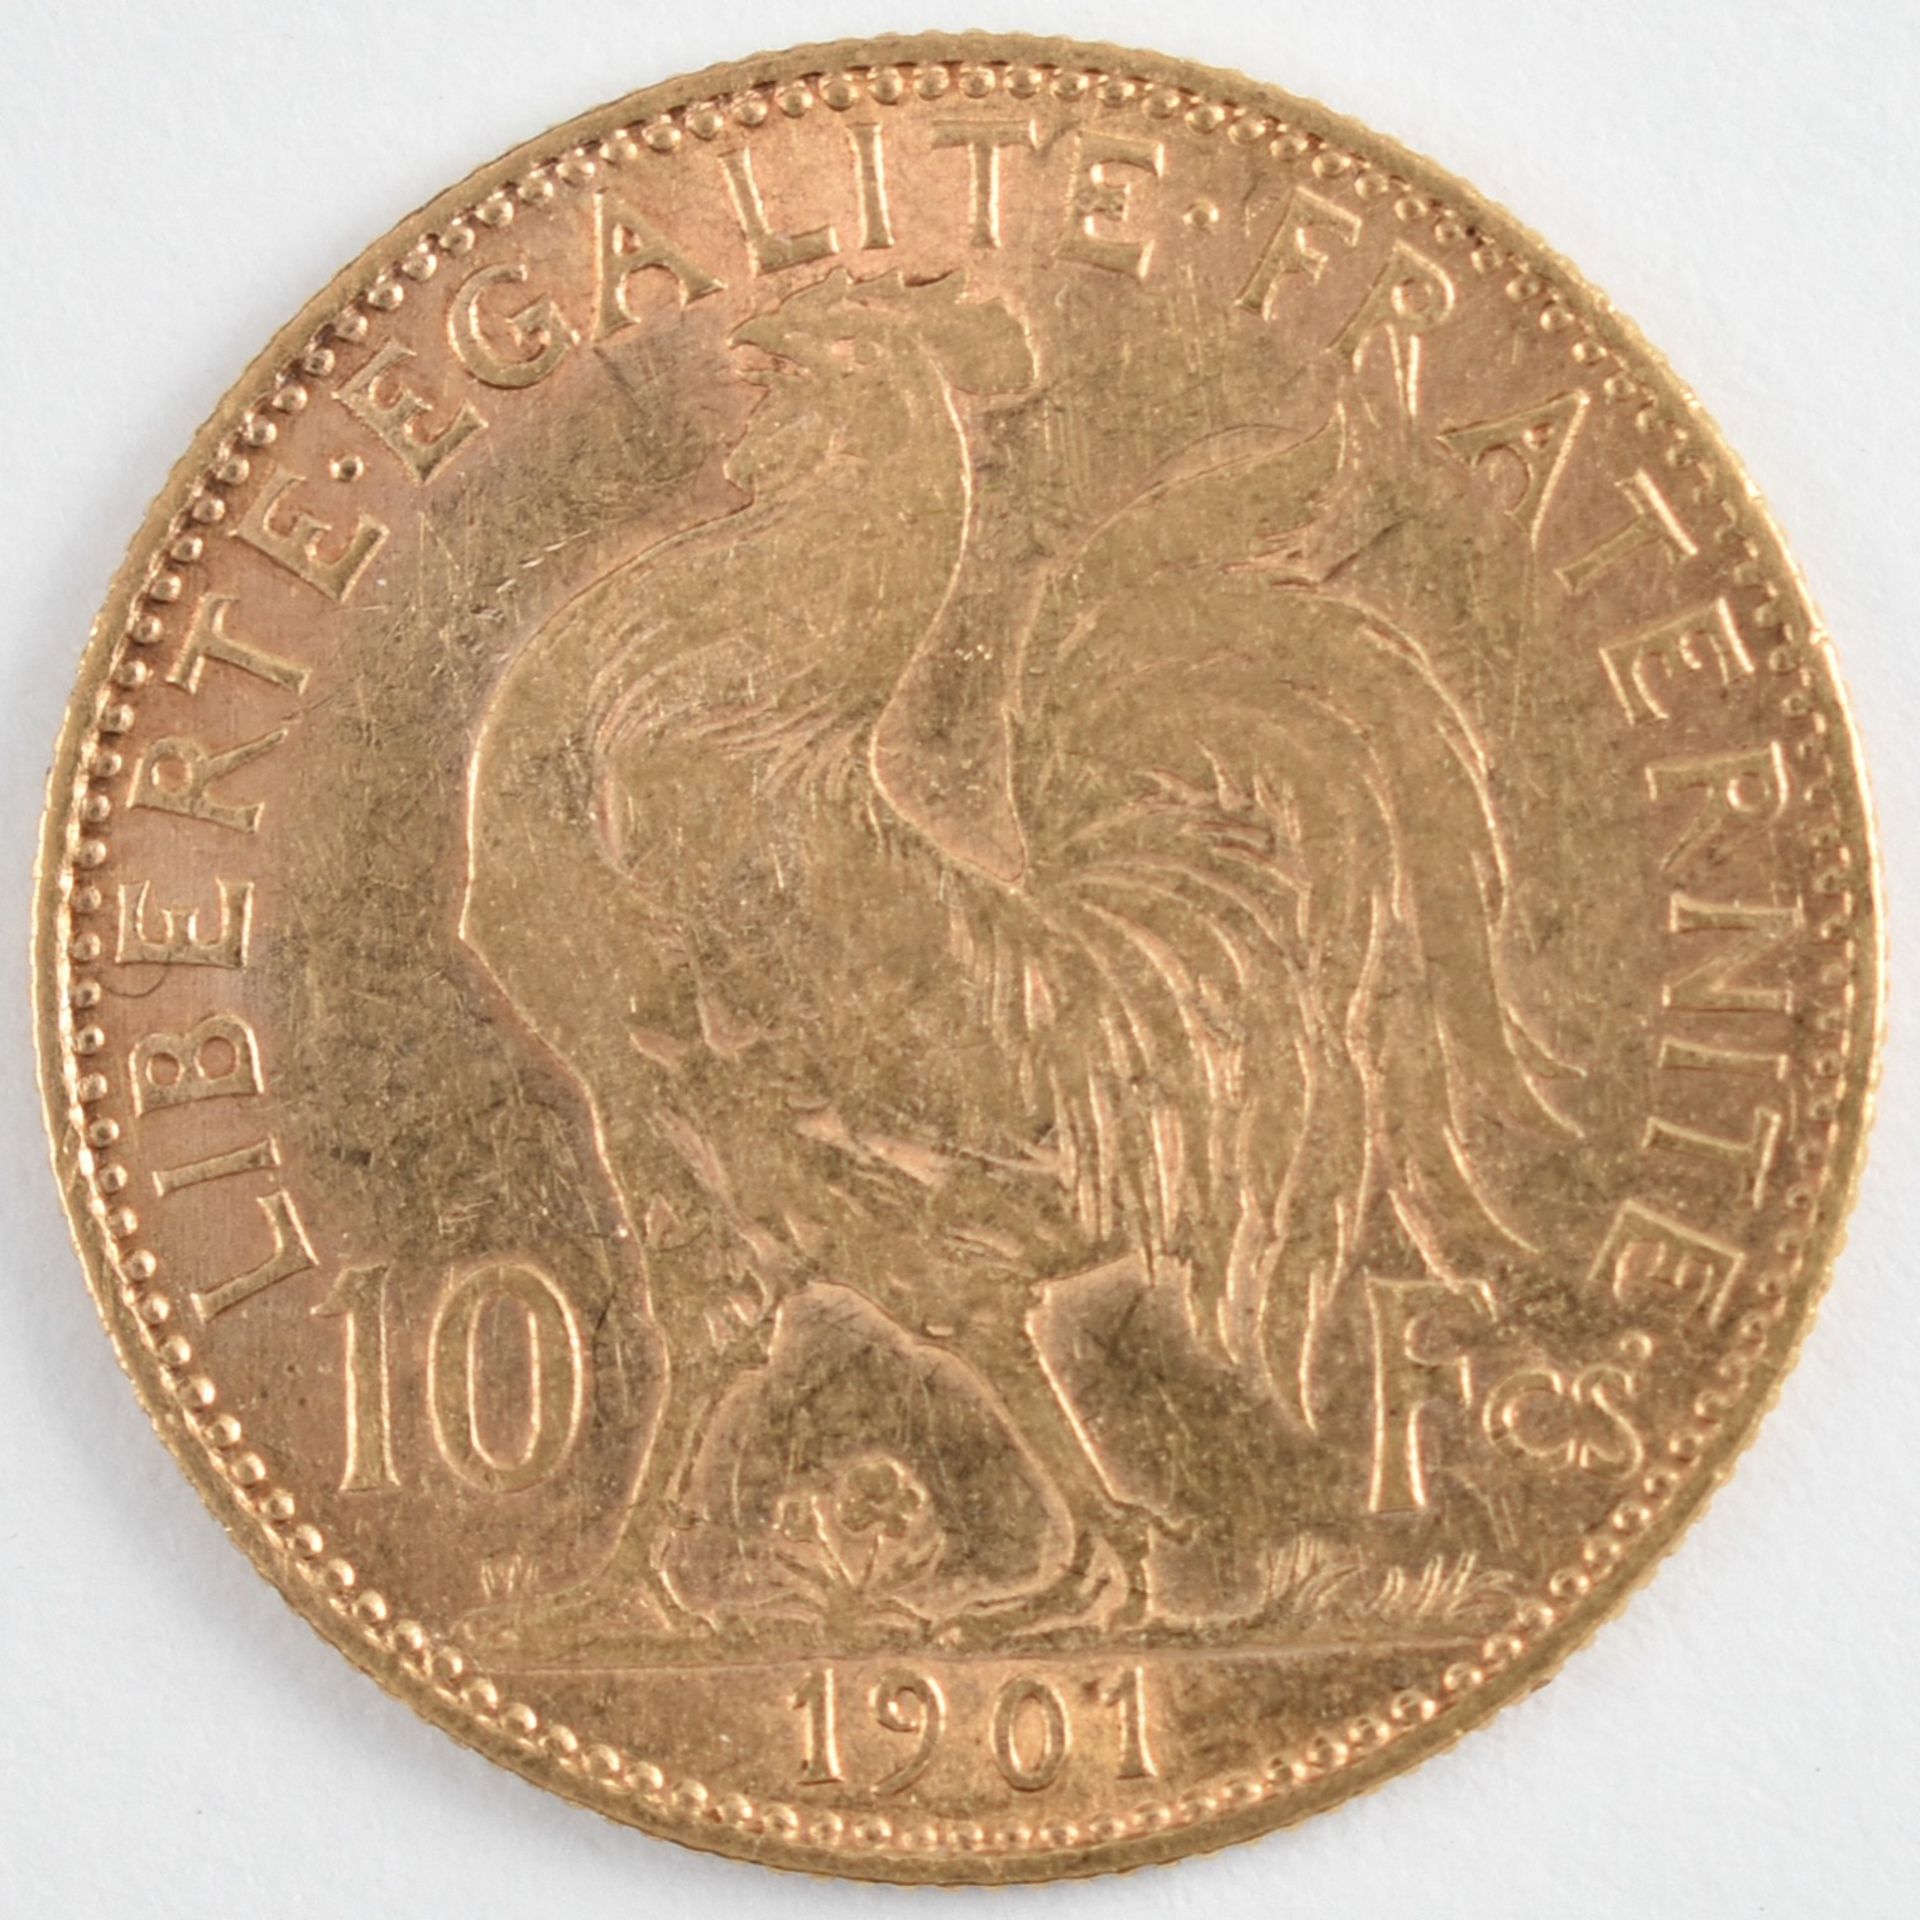 Goldmünze Frankreich 1901 10 Francs in Gold, 900/1000, 3,23 g, D ca. 18,9 mm, av. Marianne Kopf - Bild 3 aus 3